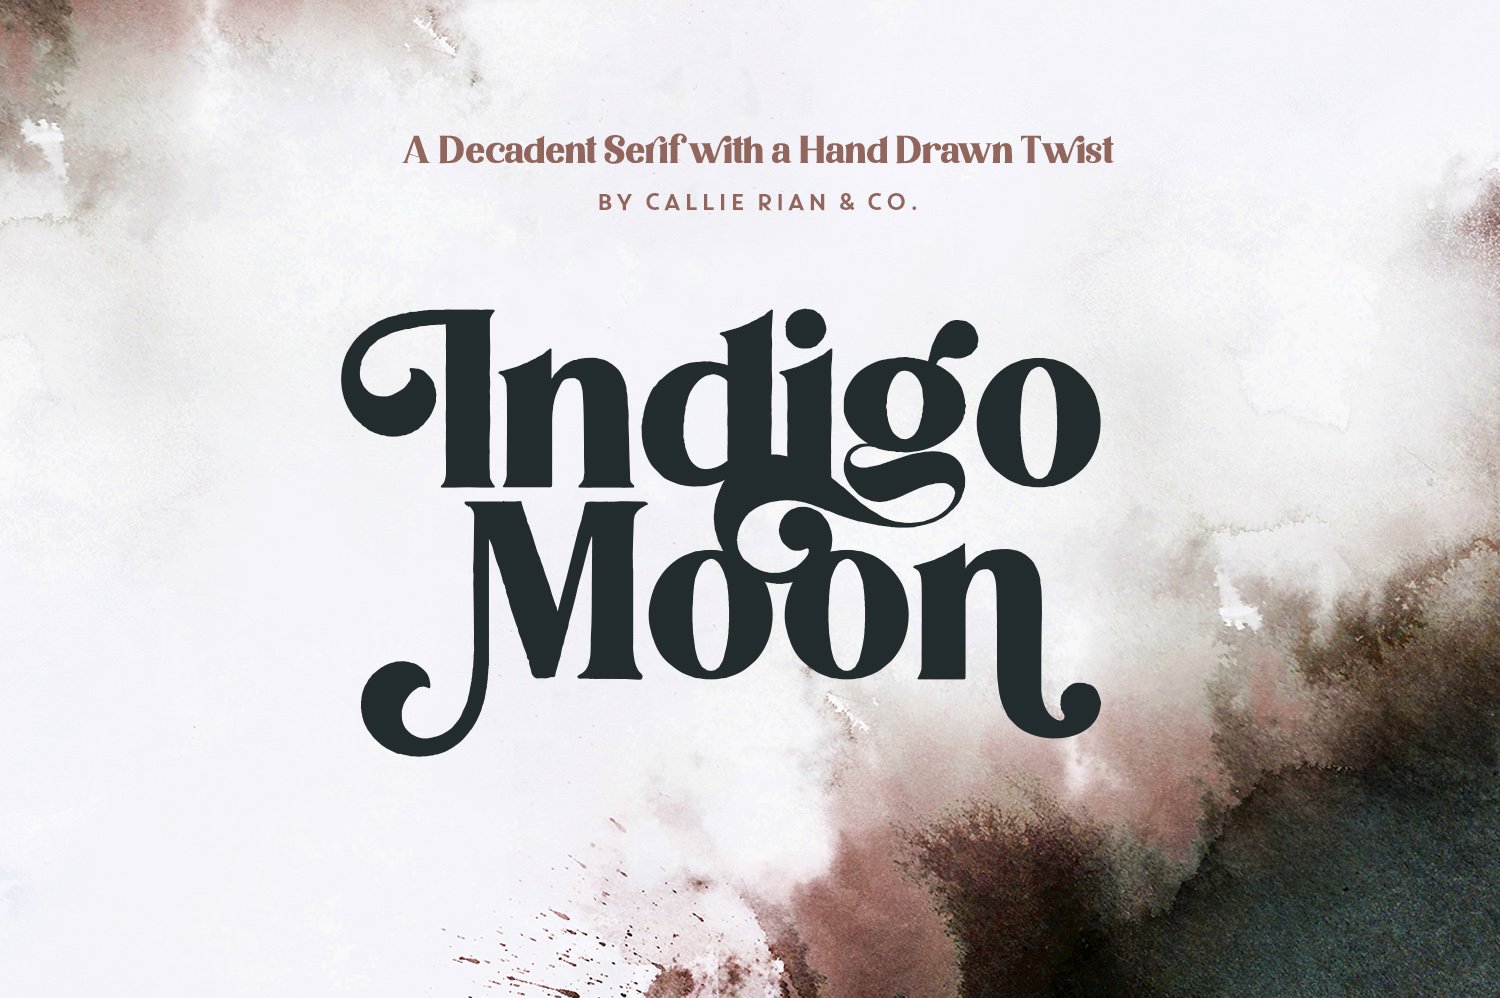 Indigo Moon Decadent Serif cover image.